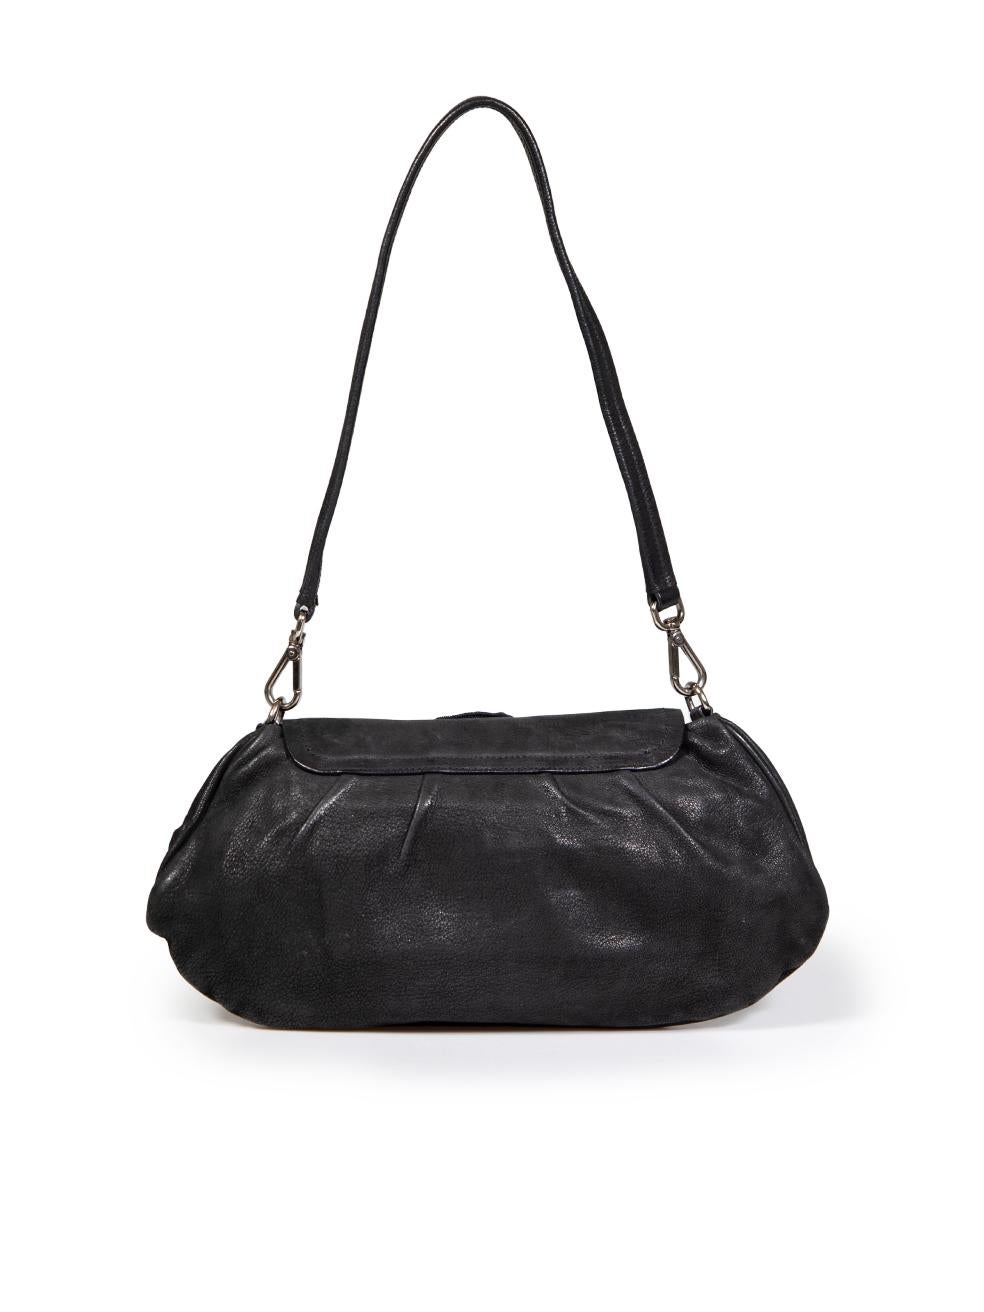 Prada Black Leather Embellished Shoulder Bag In Good Condition For Sale In London, GB